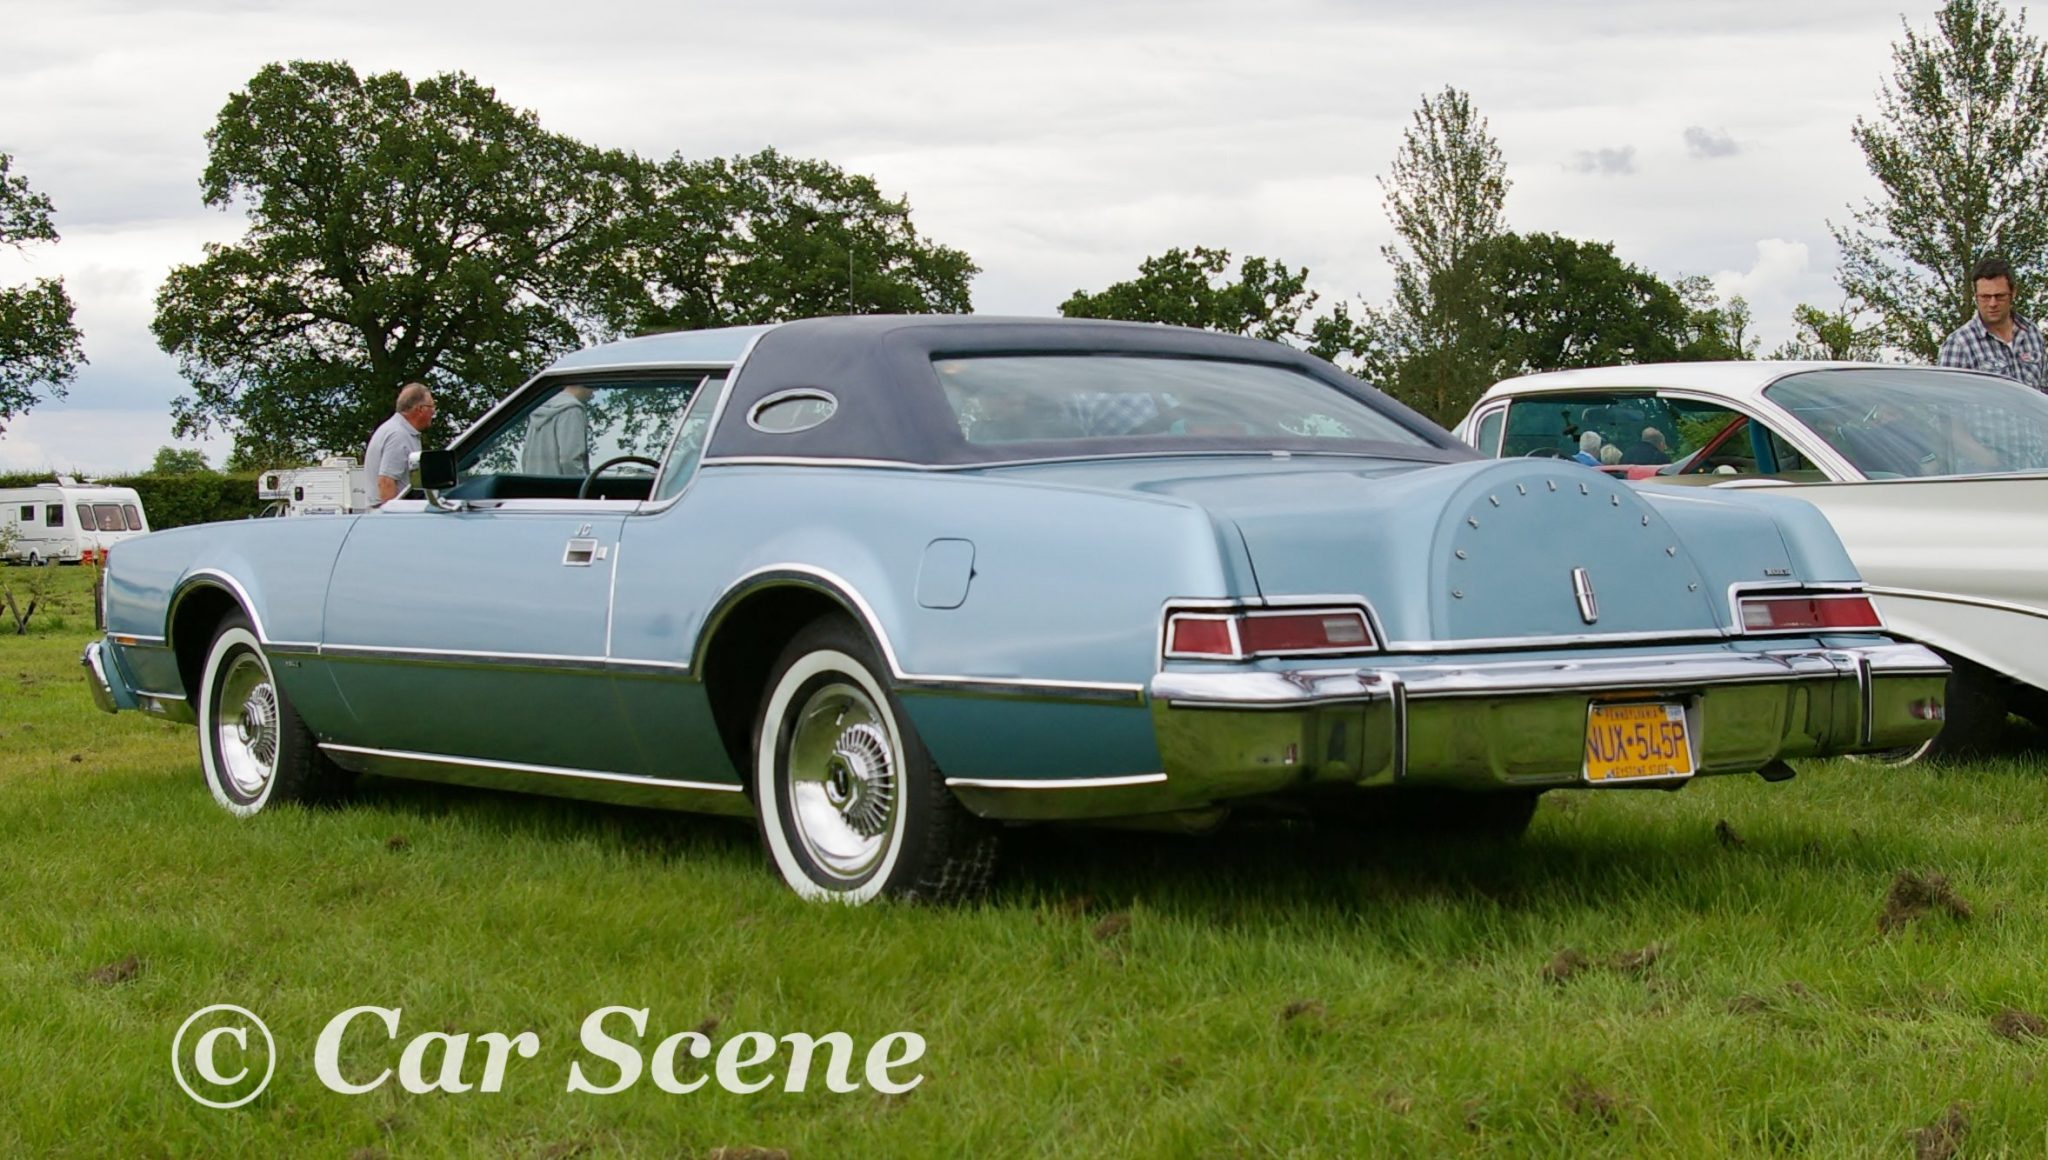 1975 Lincoln Continental 2 door hardtop rear three quarters view